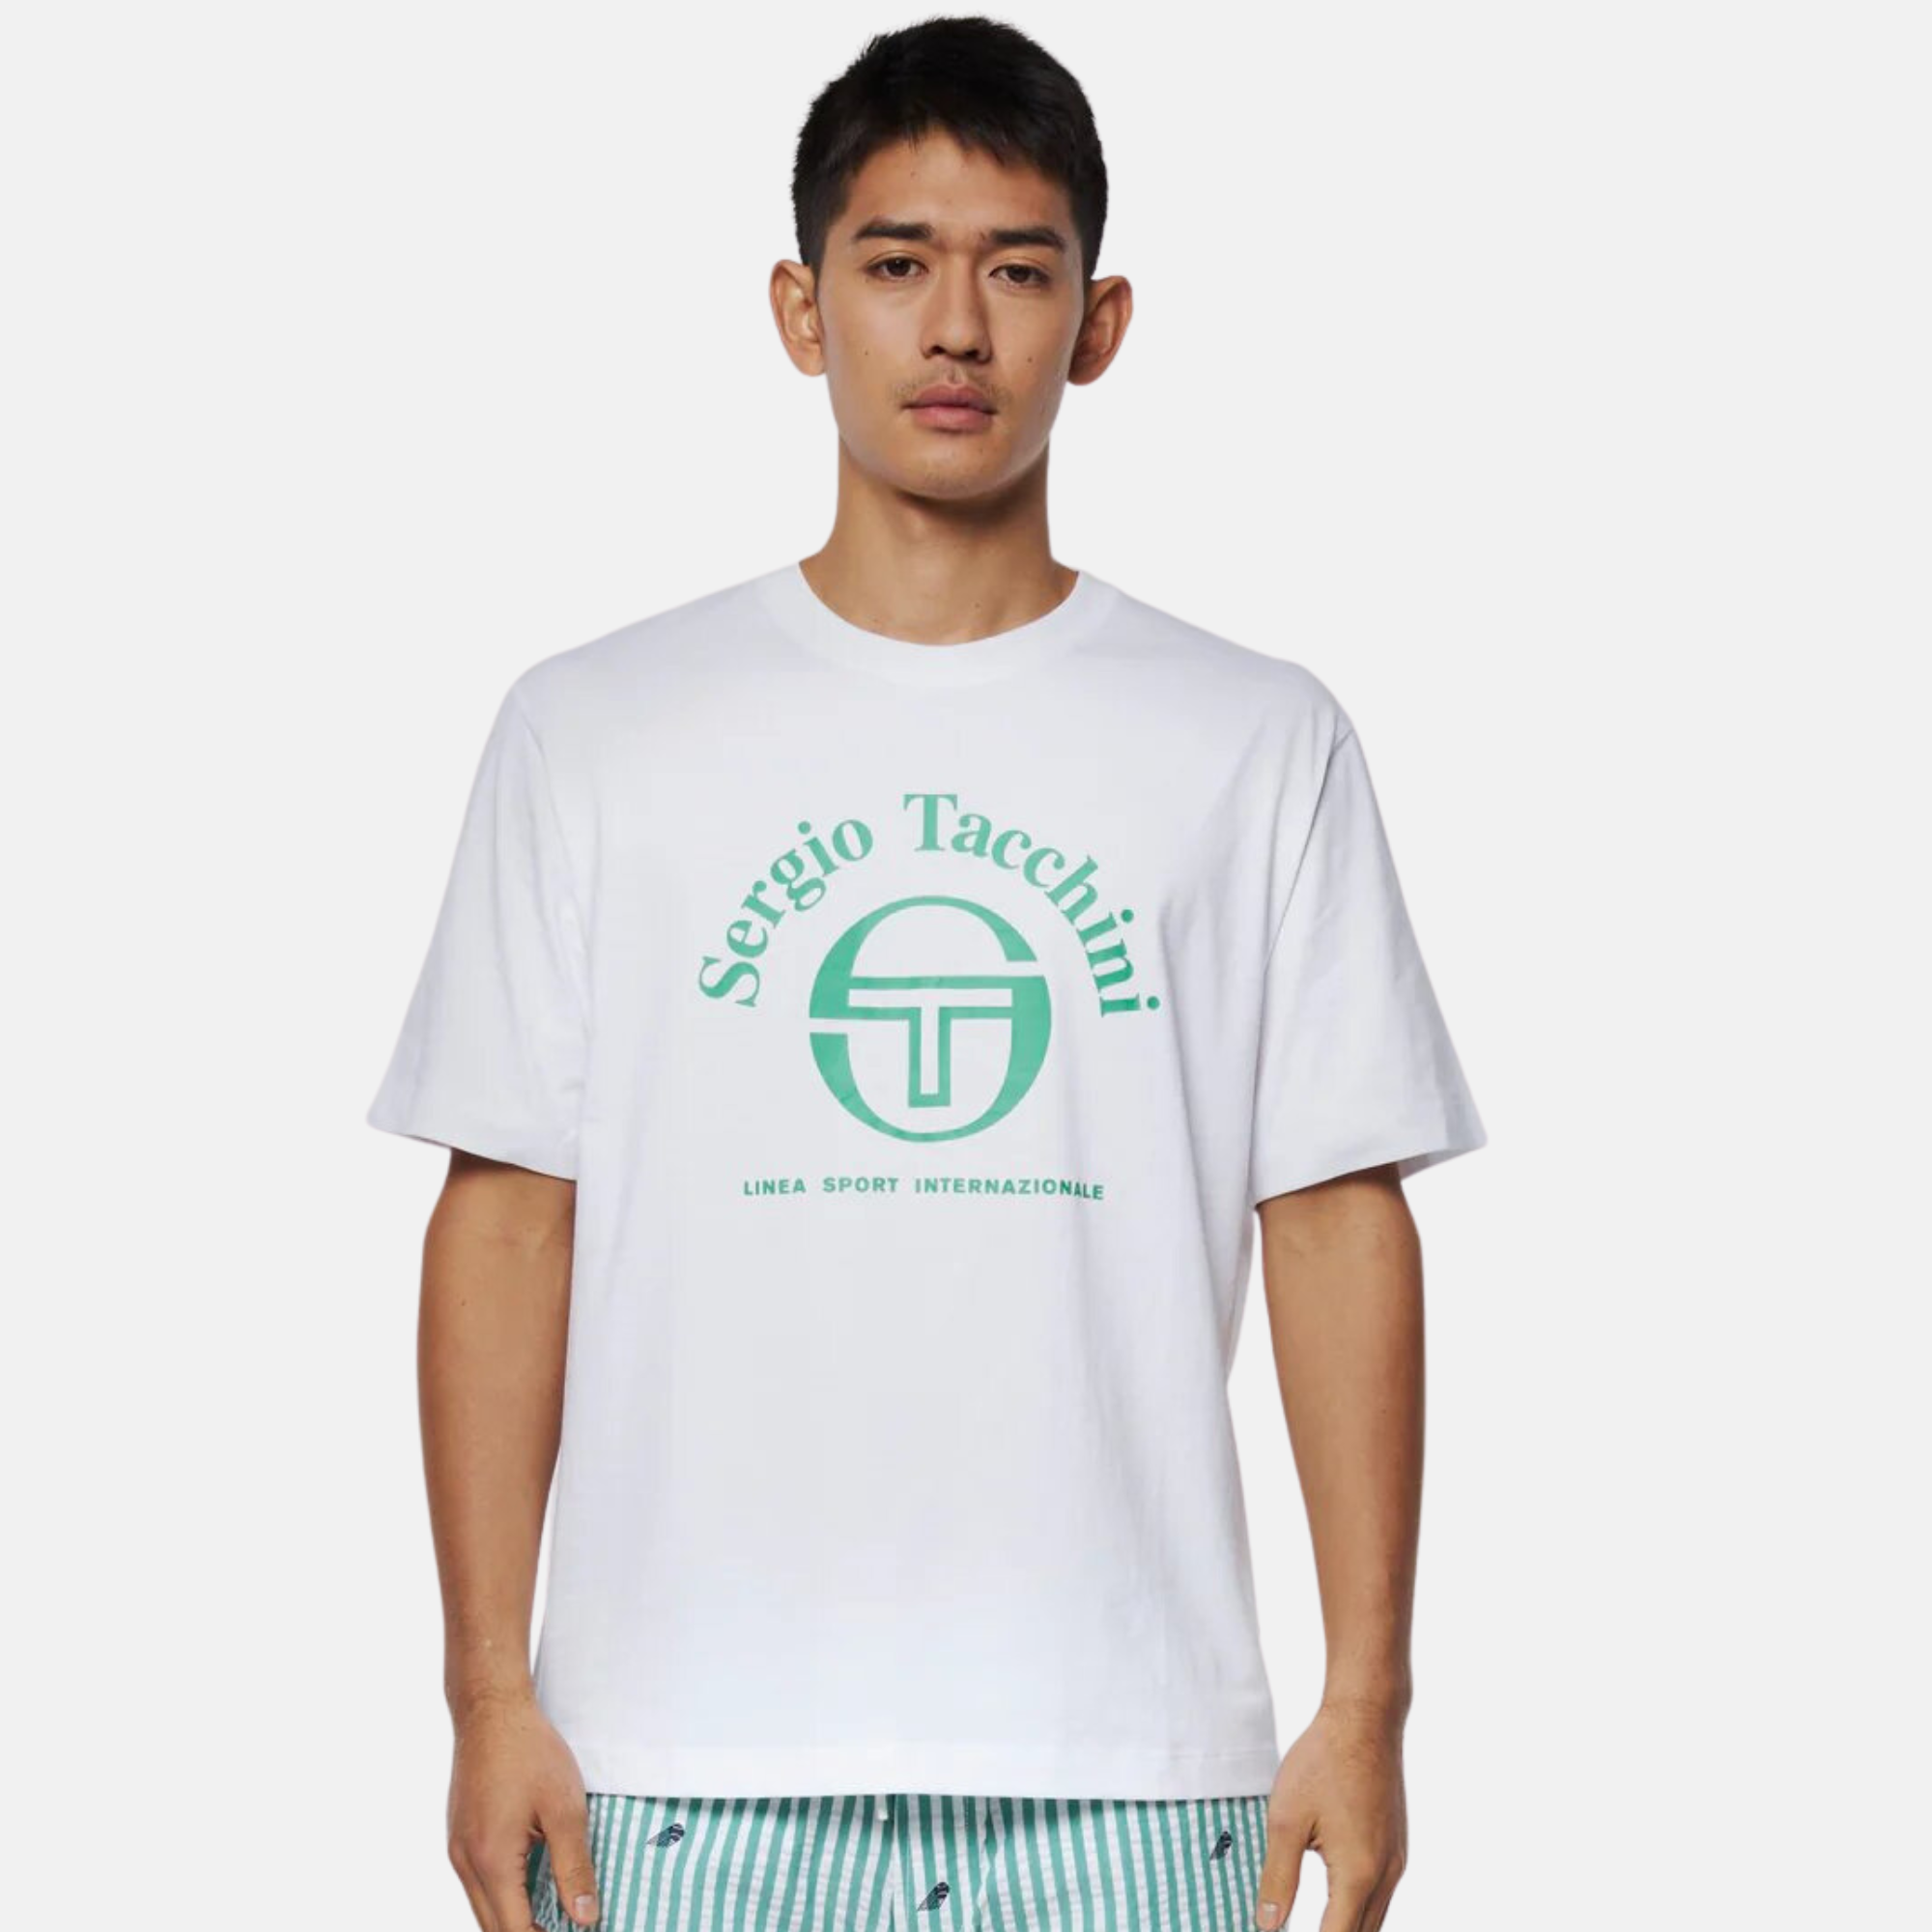 Sergio Tacchini Arch Type T-Shirt